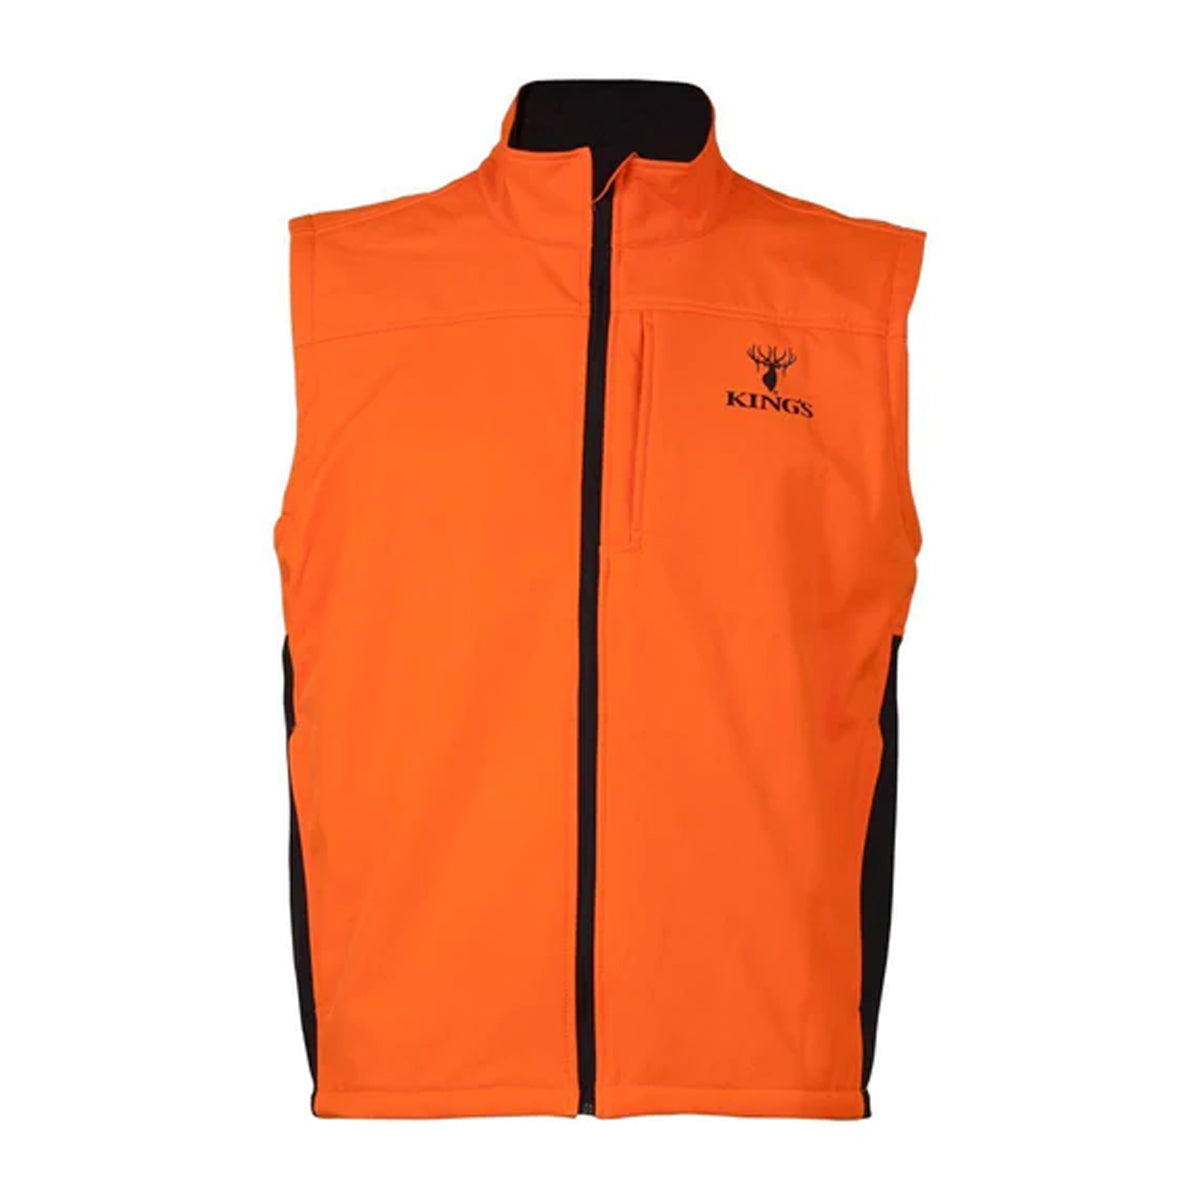 King's Blaze Soft Shell Vest in Blaze Orange by GOHUNT | King's - GOHUNT Shop